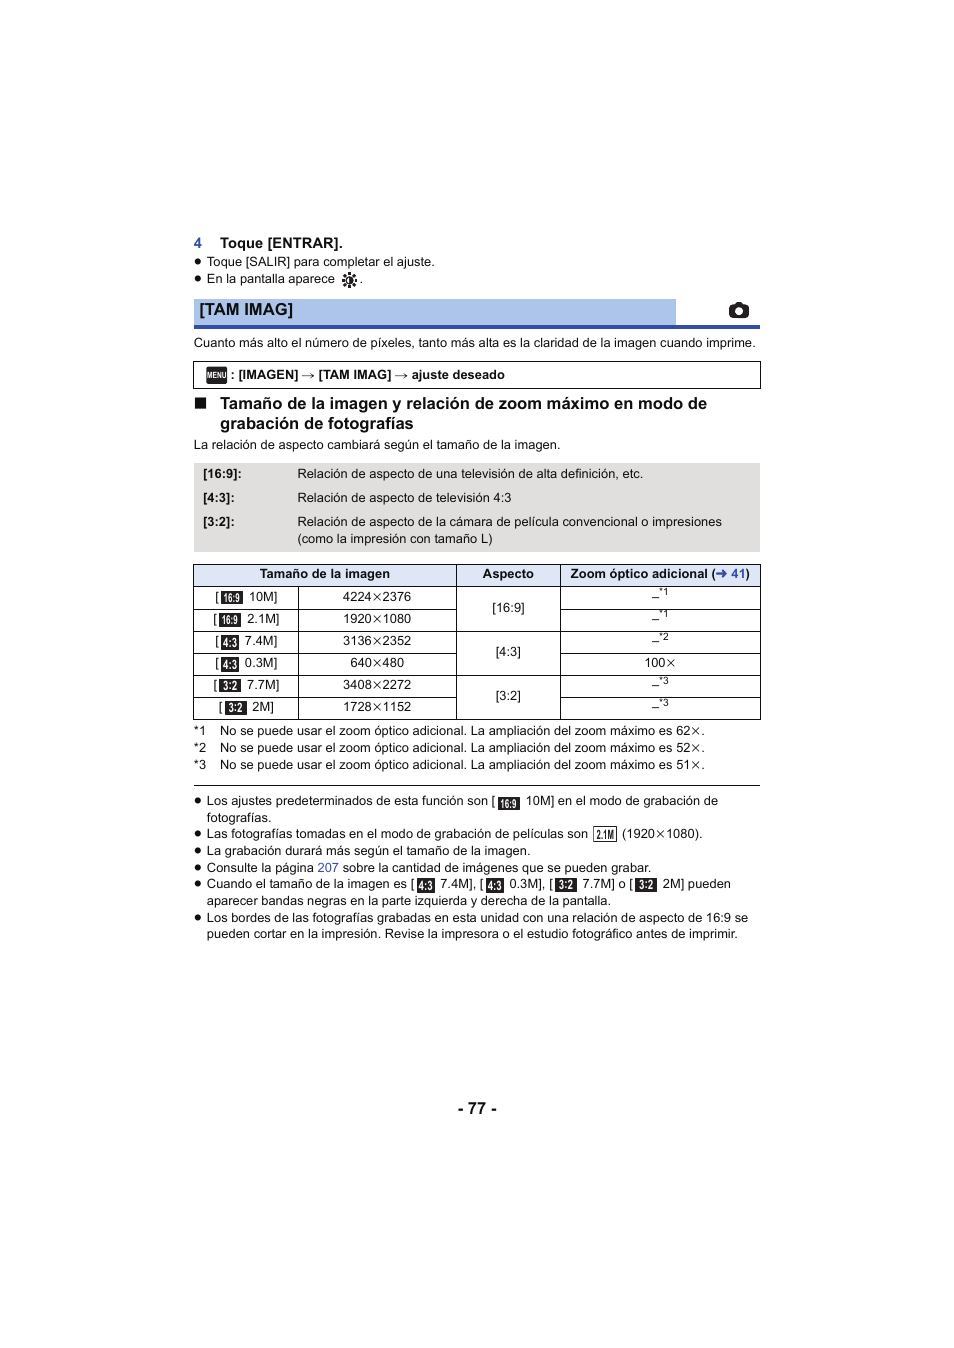 Tam imag | Panasonic HCV250EC Manual del usuario | Página 77 / 214